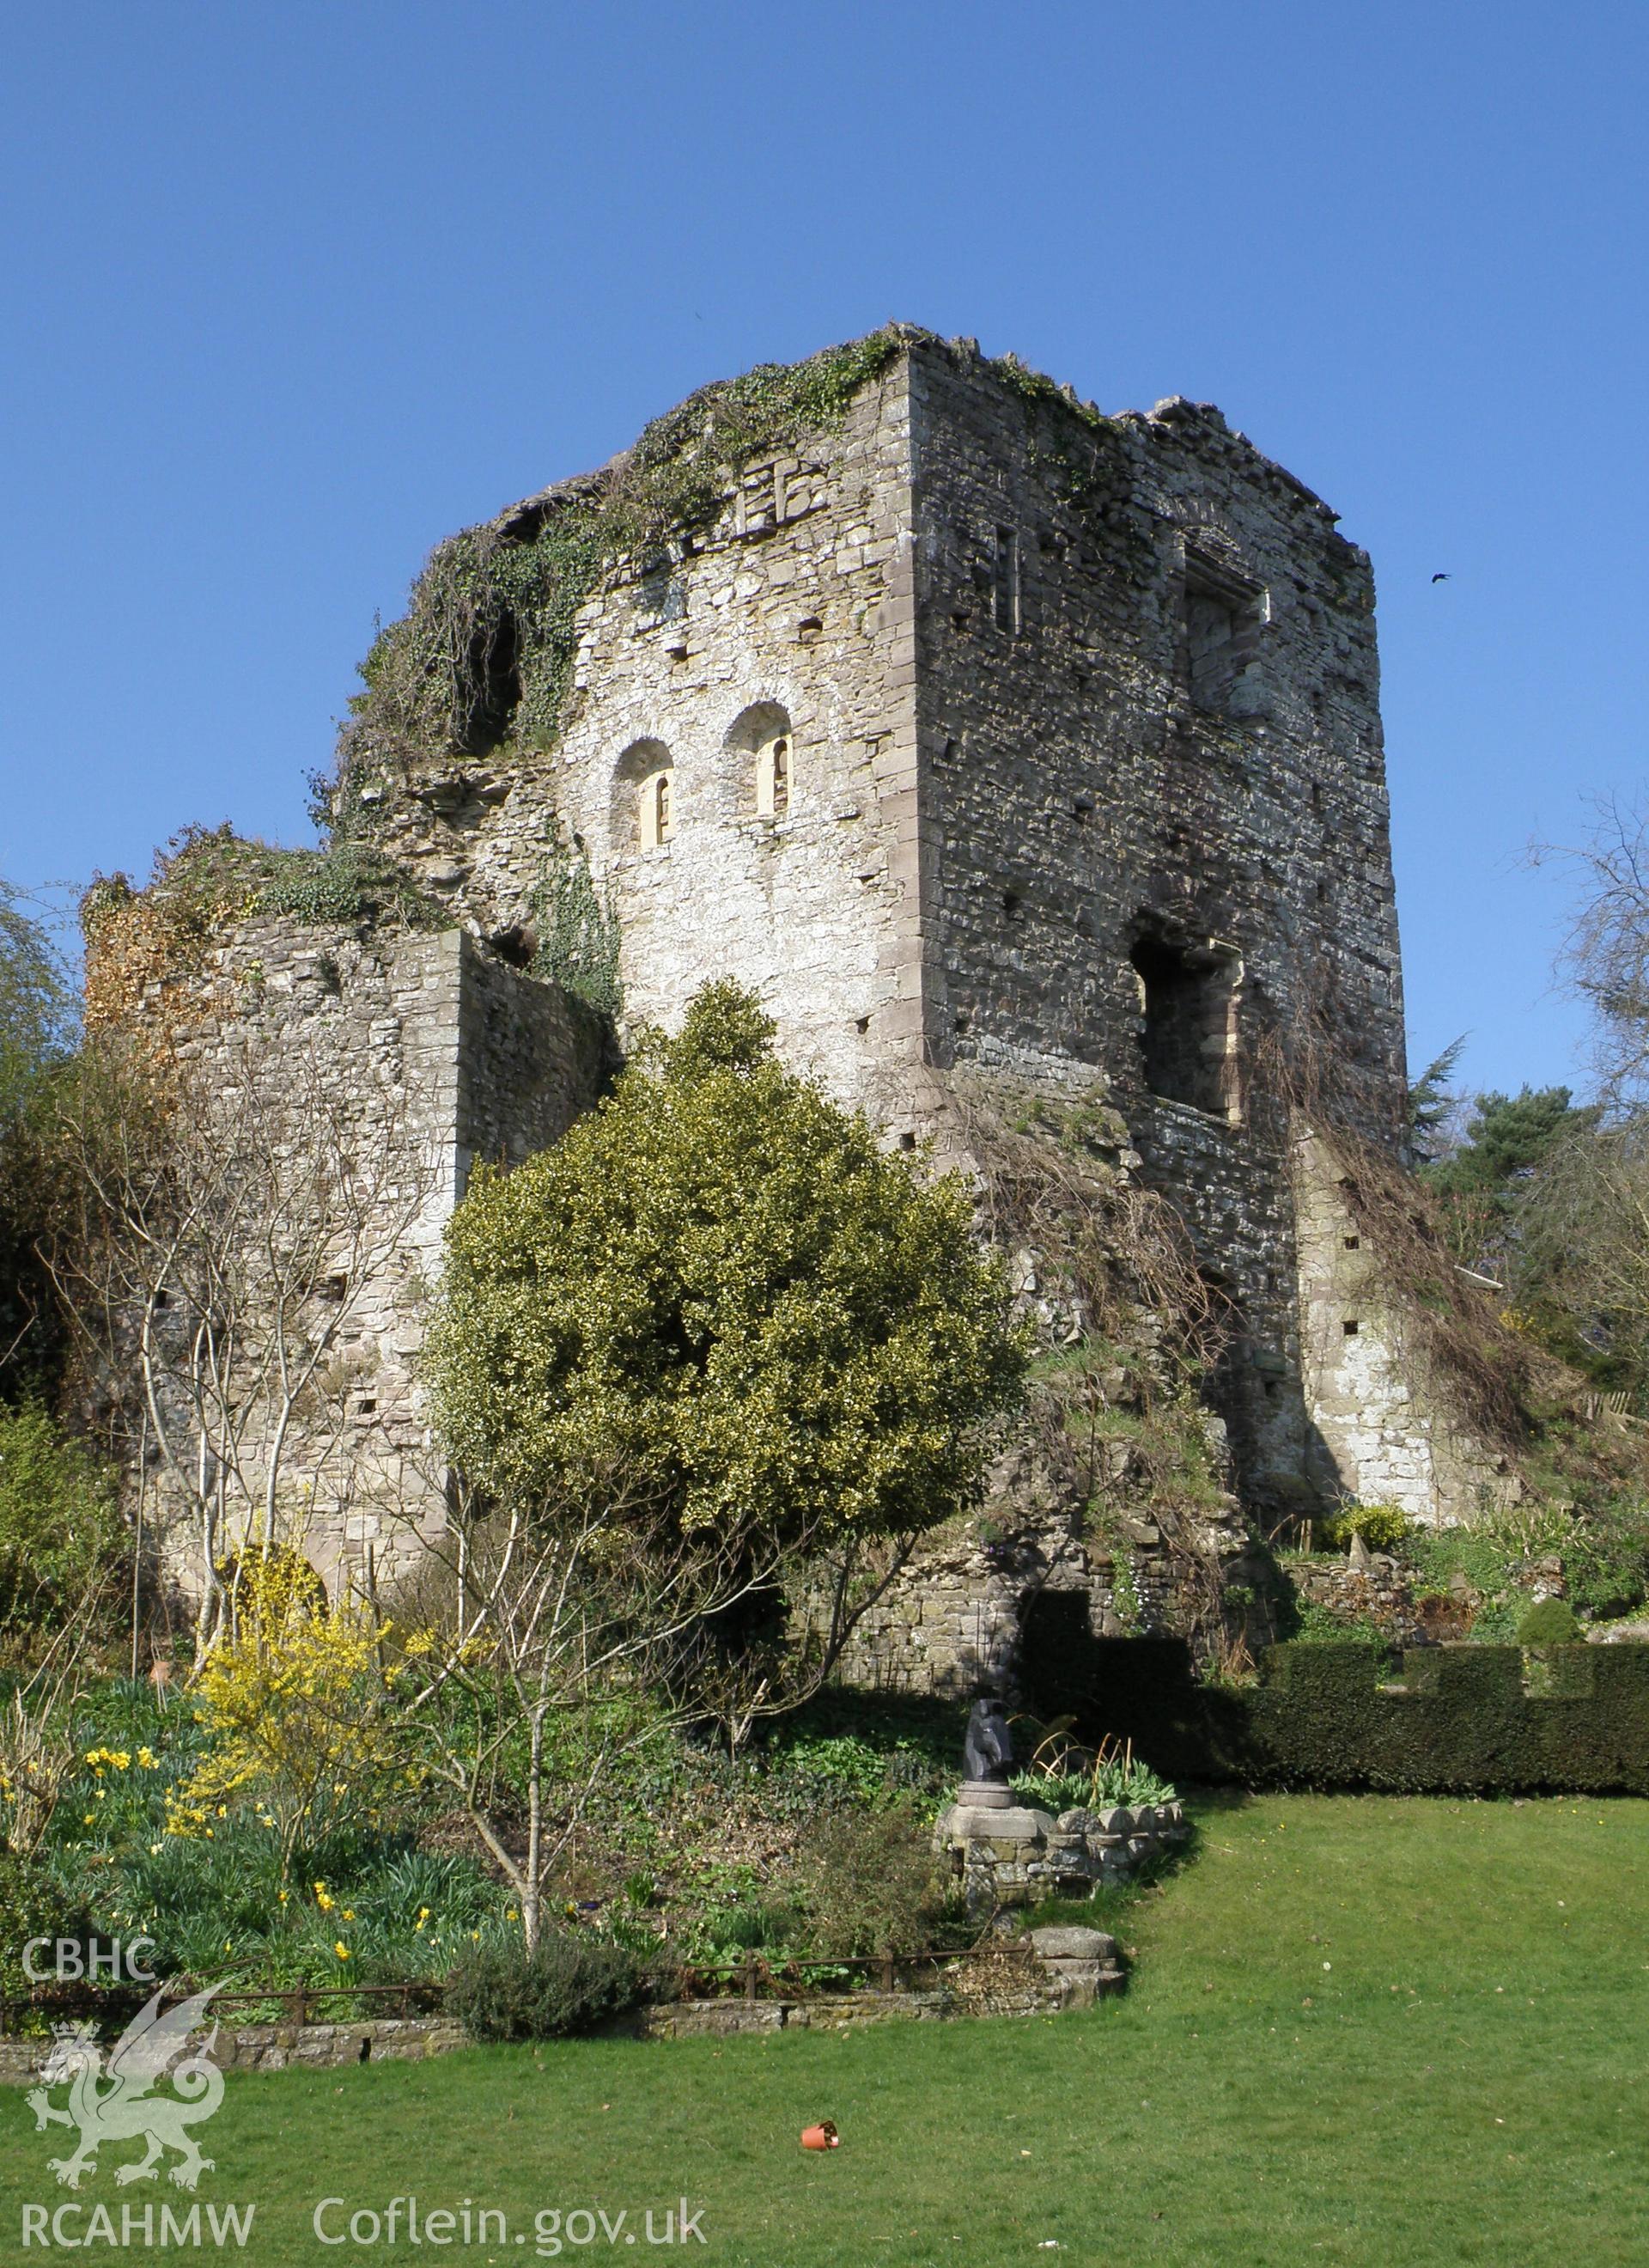 Colour photo of Usk Castle, taken by Paul R. Davis, 19th March 2011.